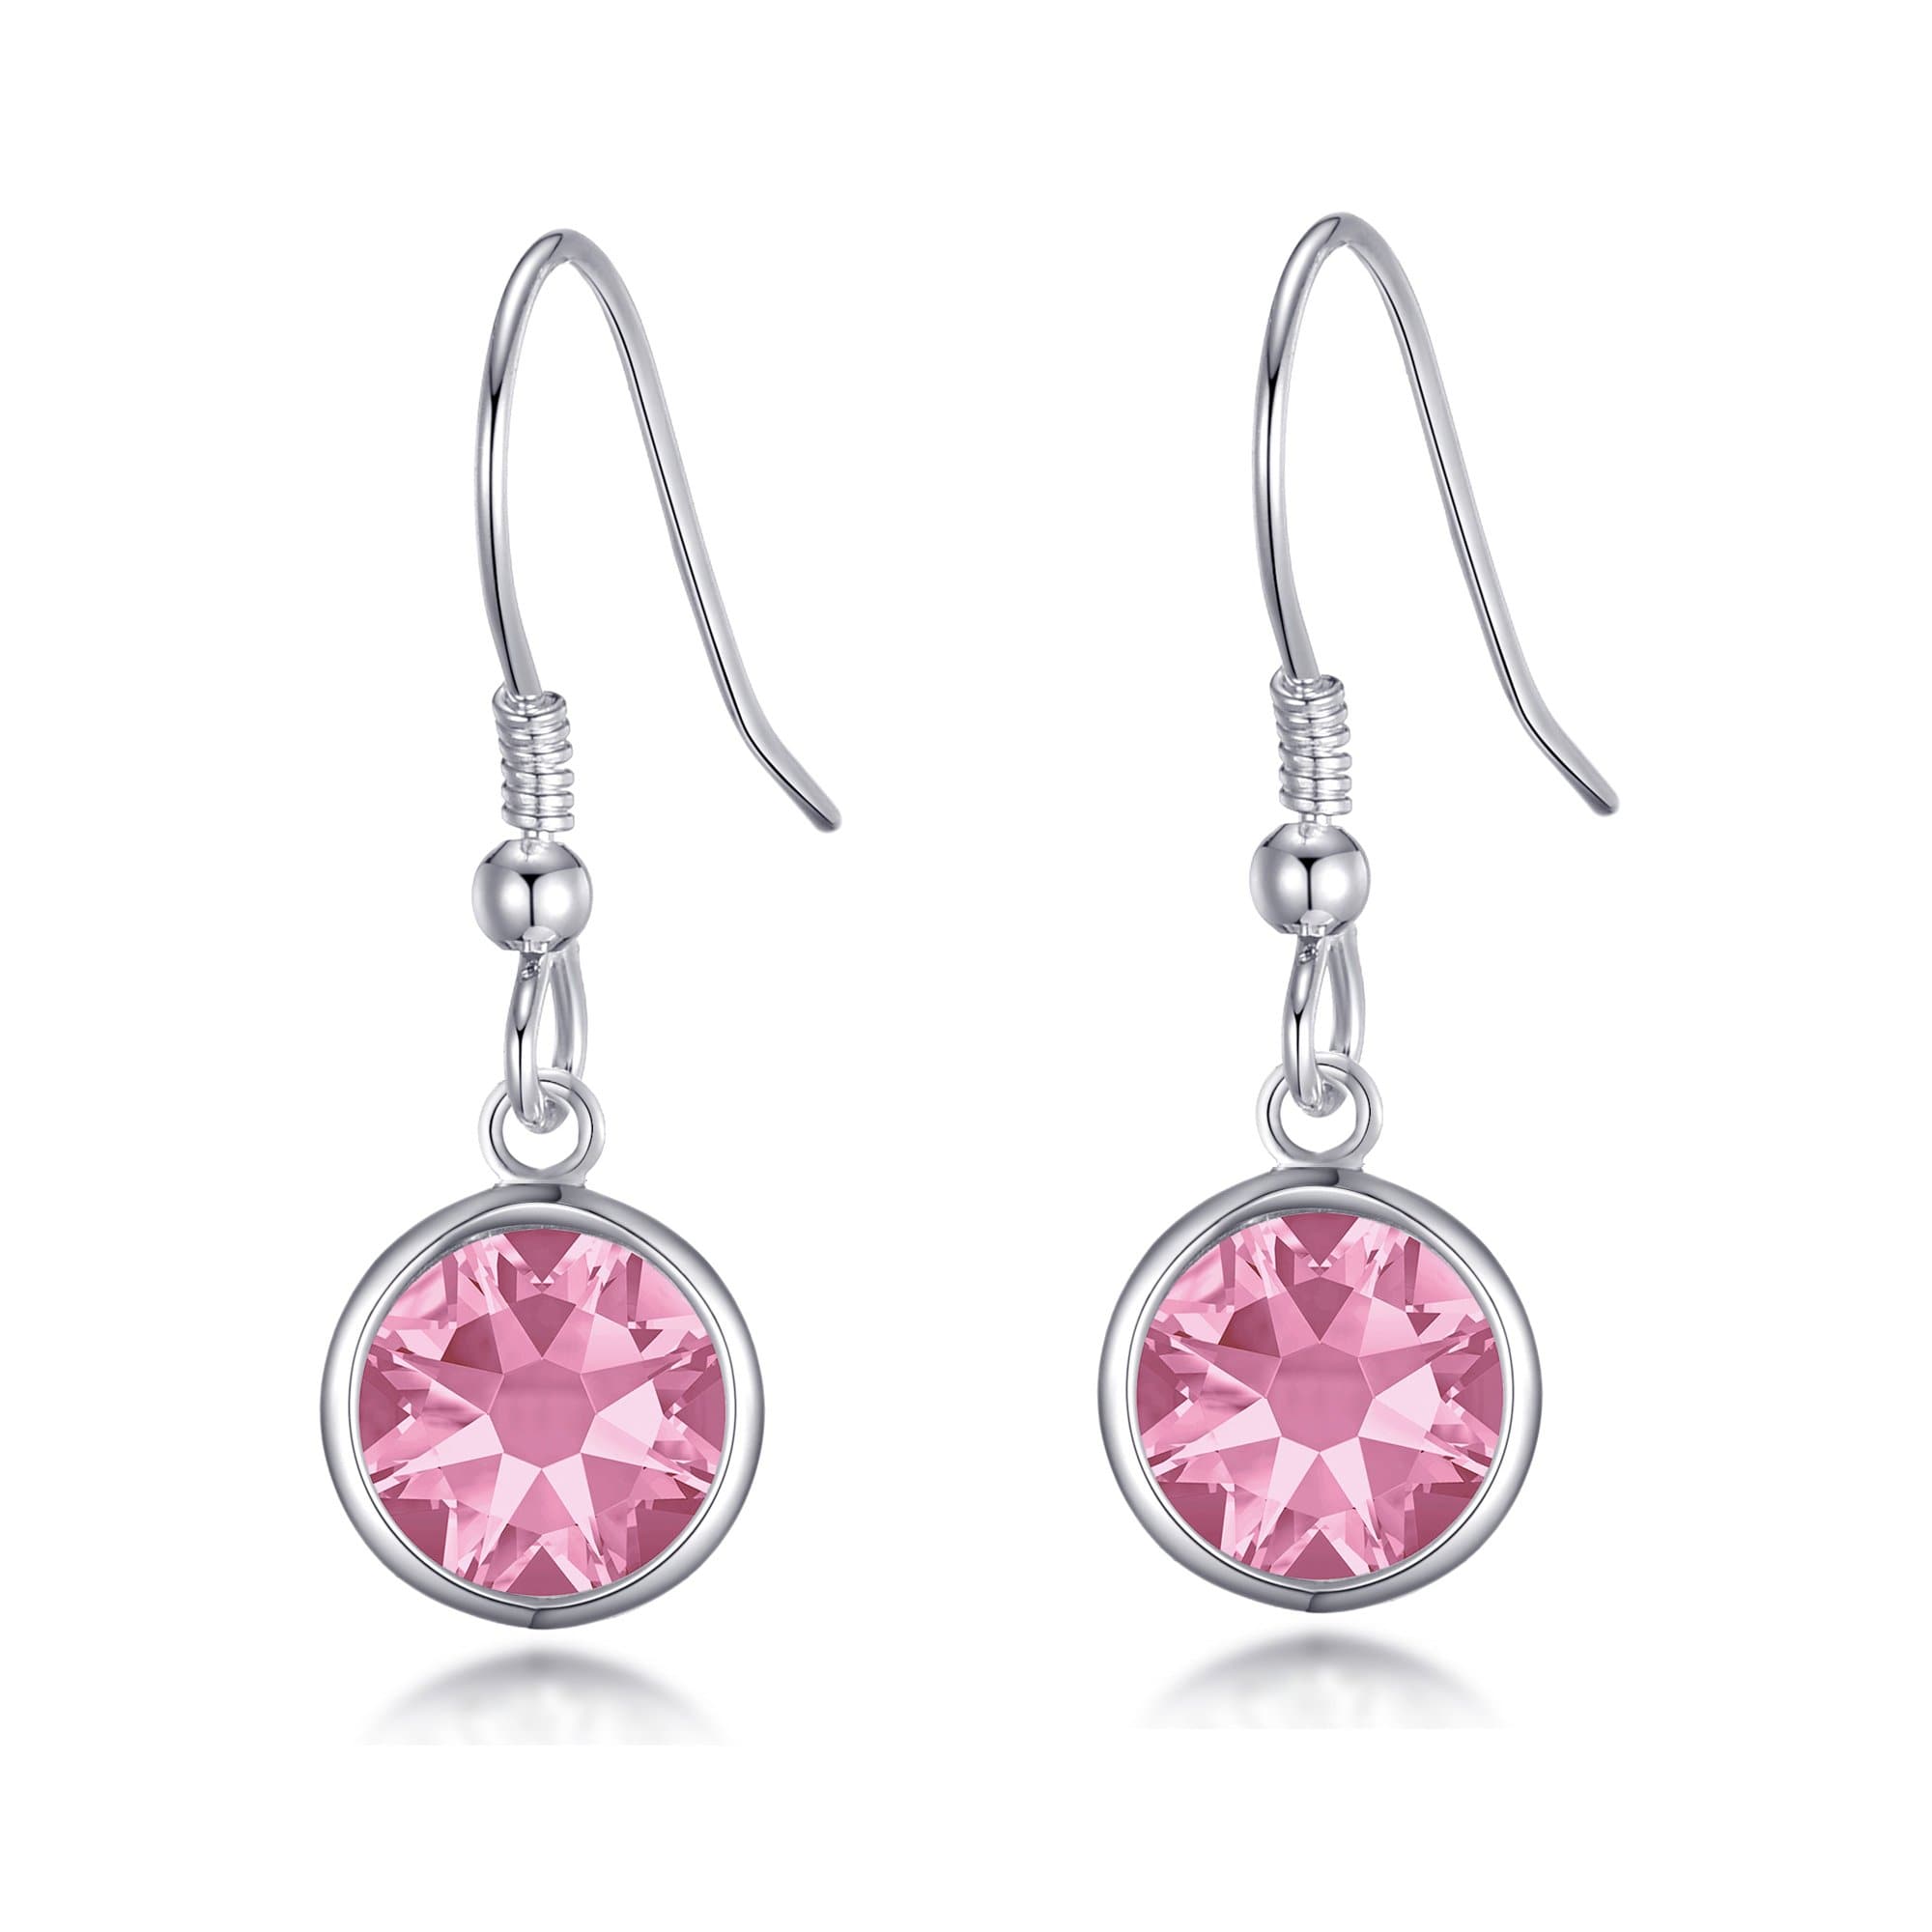 Pink Crystal Drop Earrings Created with Zircondia® Crystals by Philip Jones Jewellery